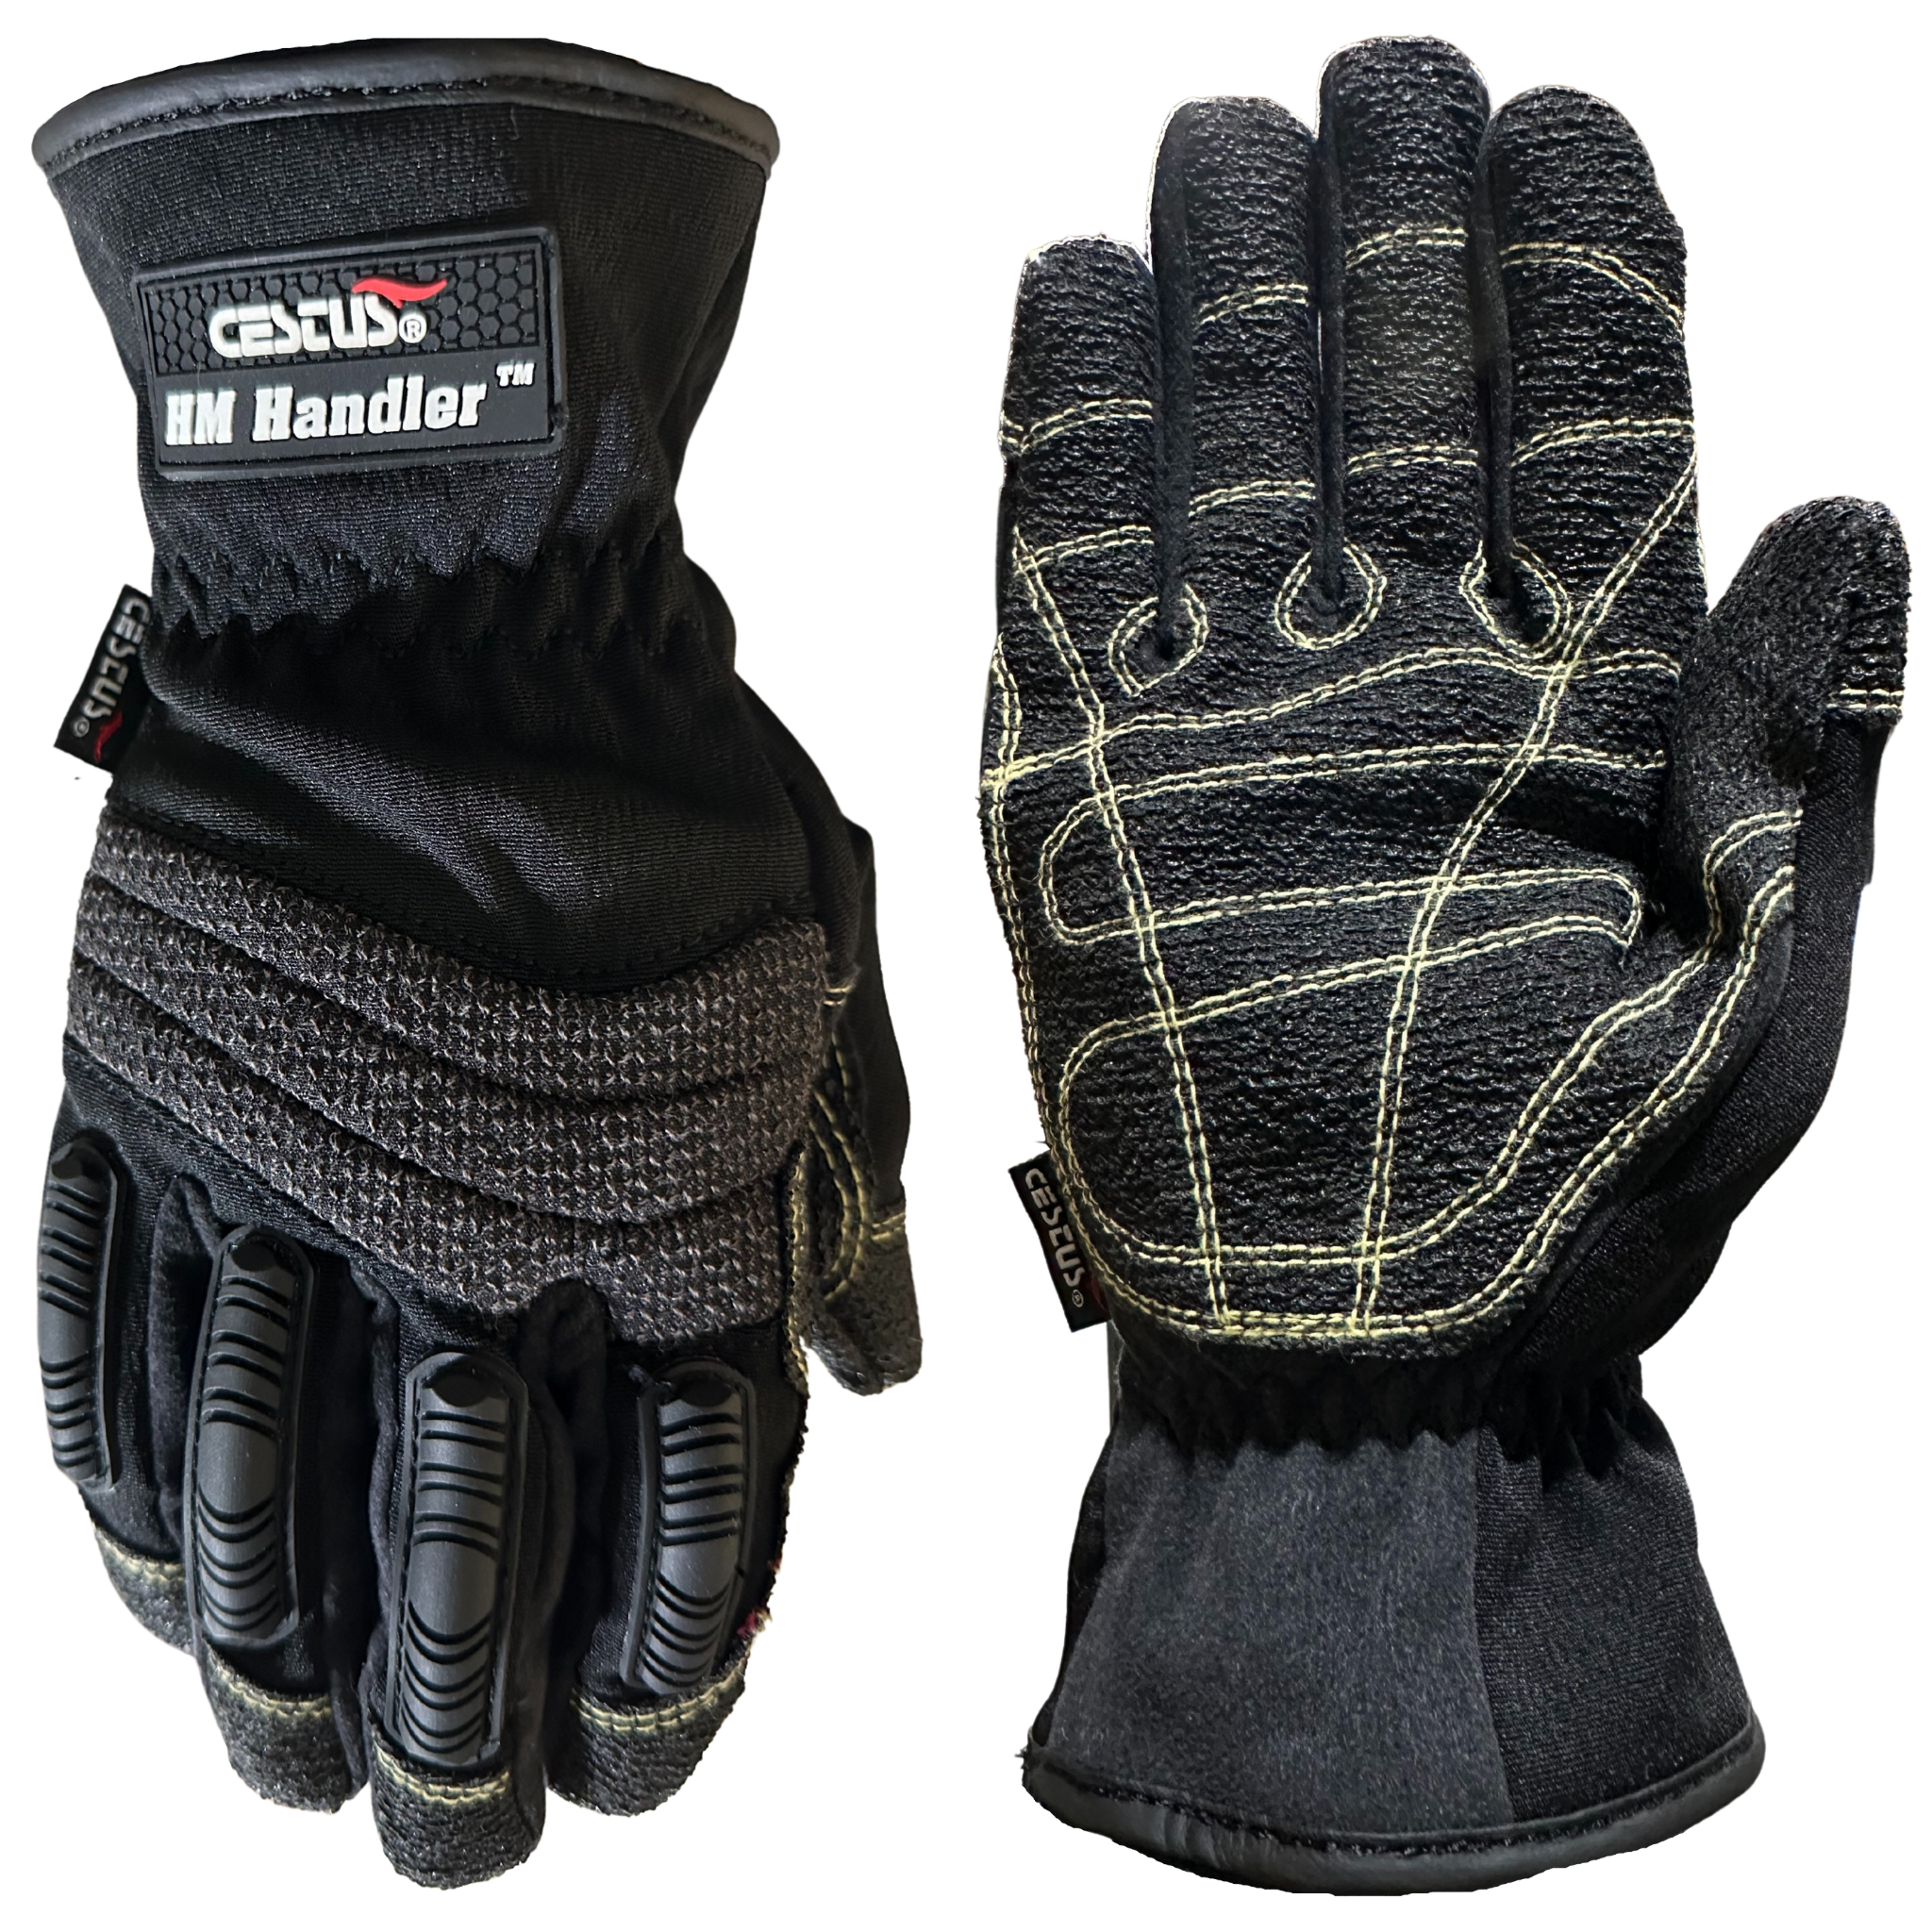 Cestus Armored Gloves - HM Handler #4021 #4022 2XL / Black